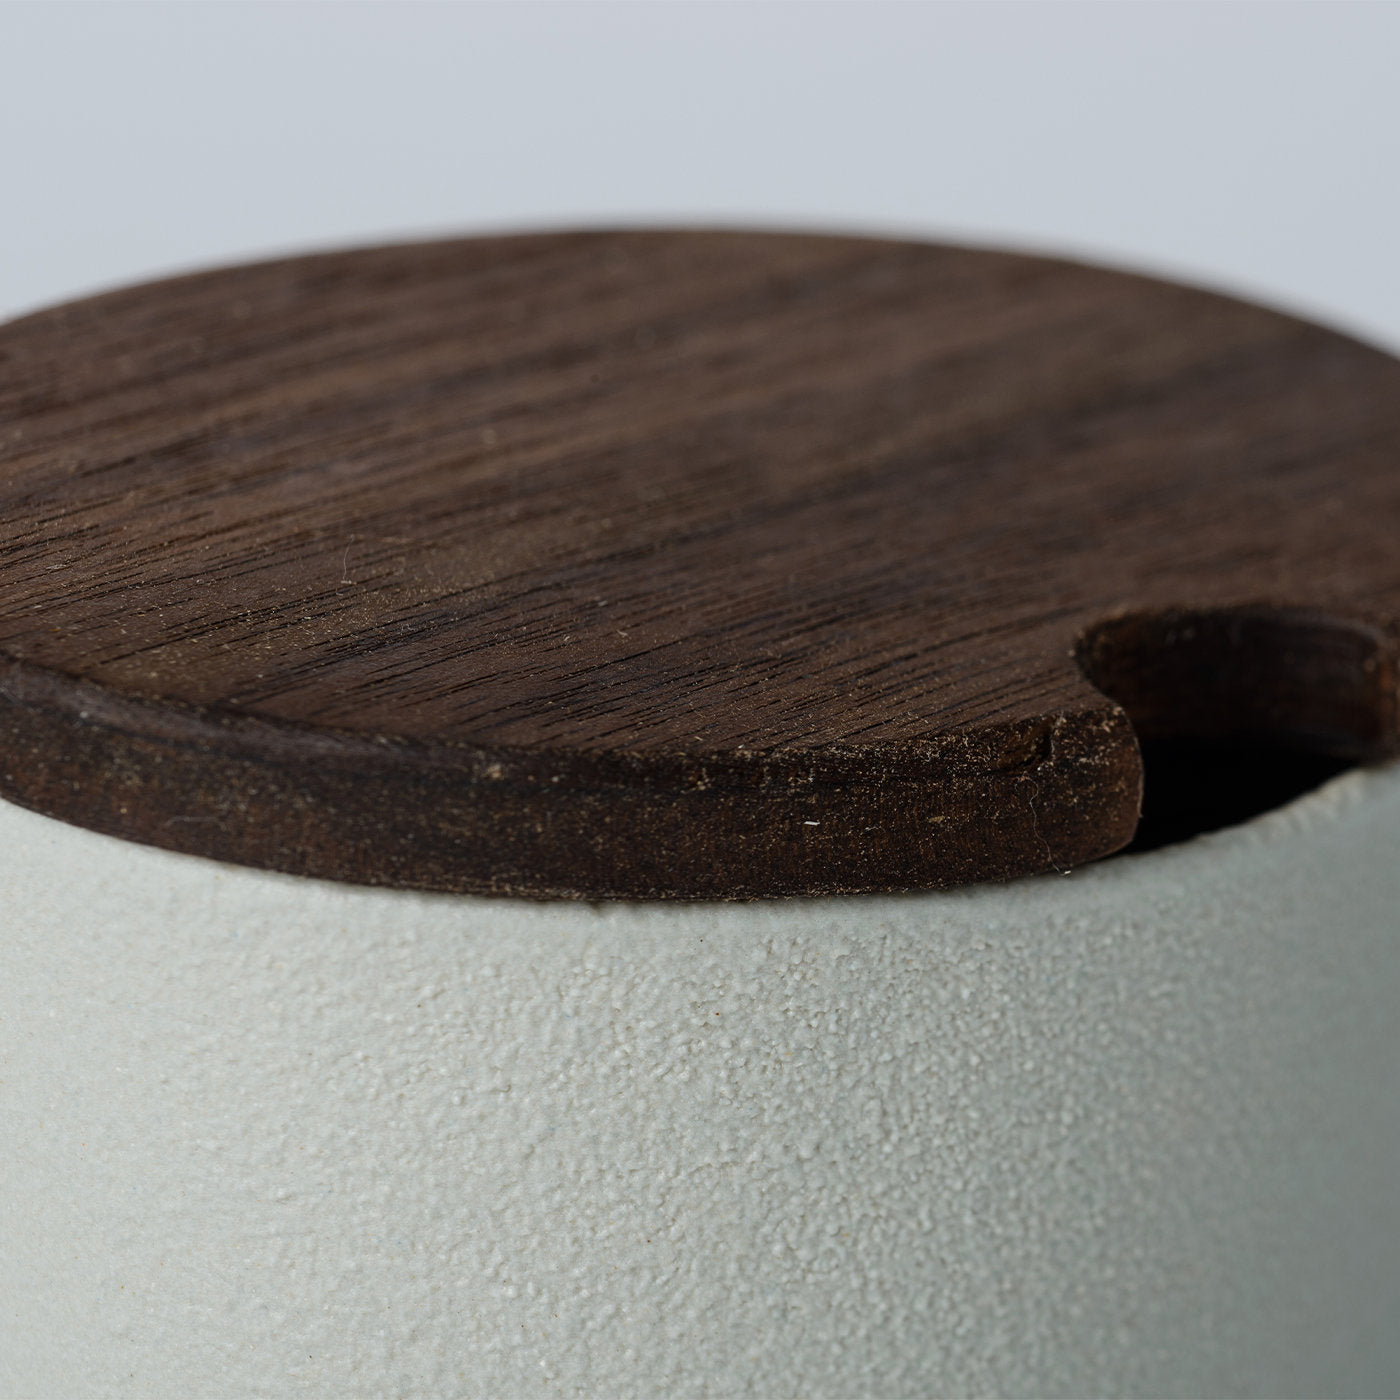 Azucarero de cerámica con tapa de madera y tacitas de cerámica - Vista alternativa 1